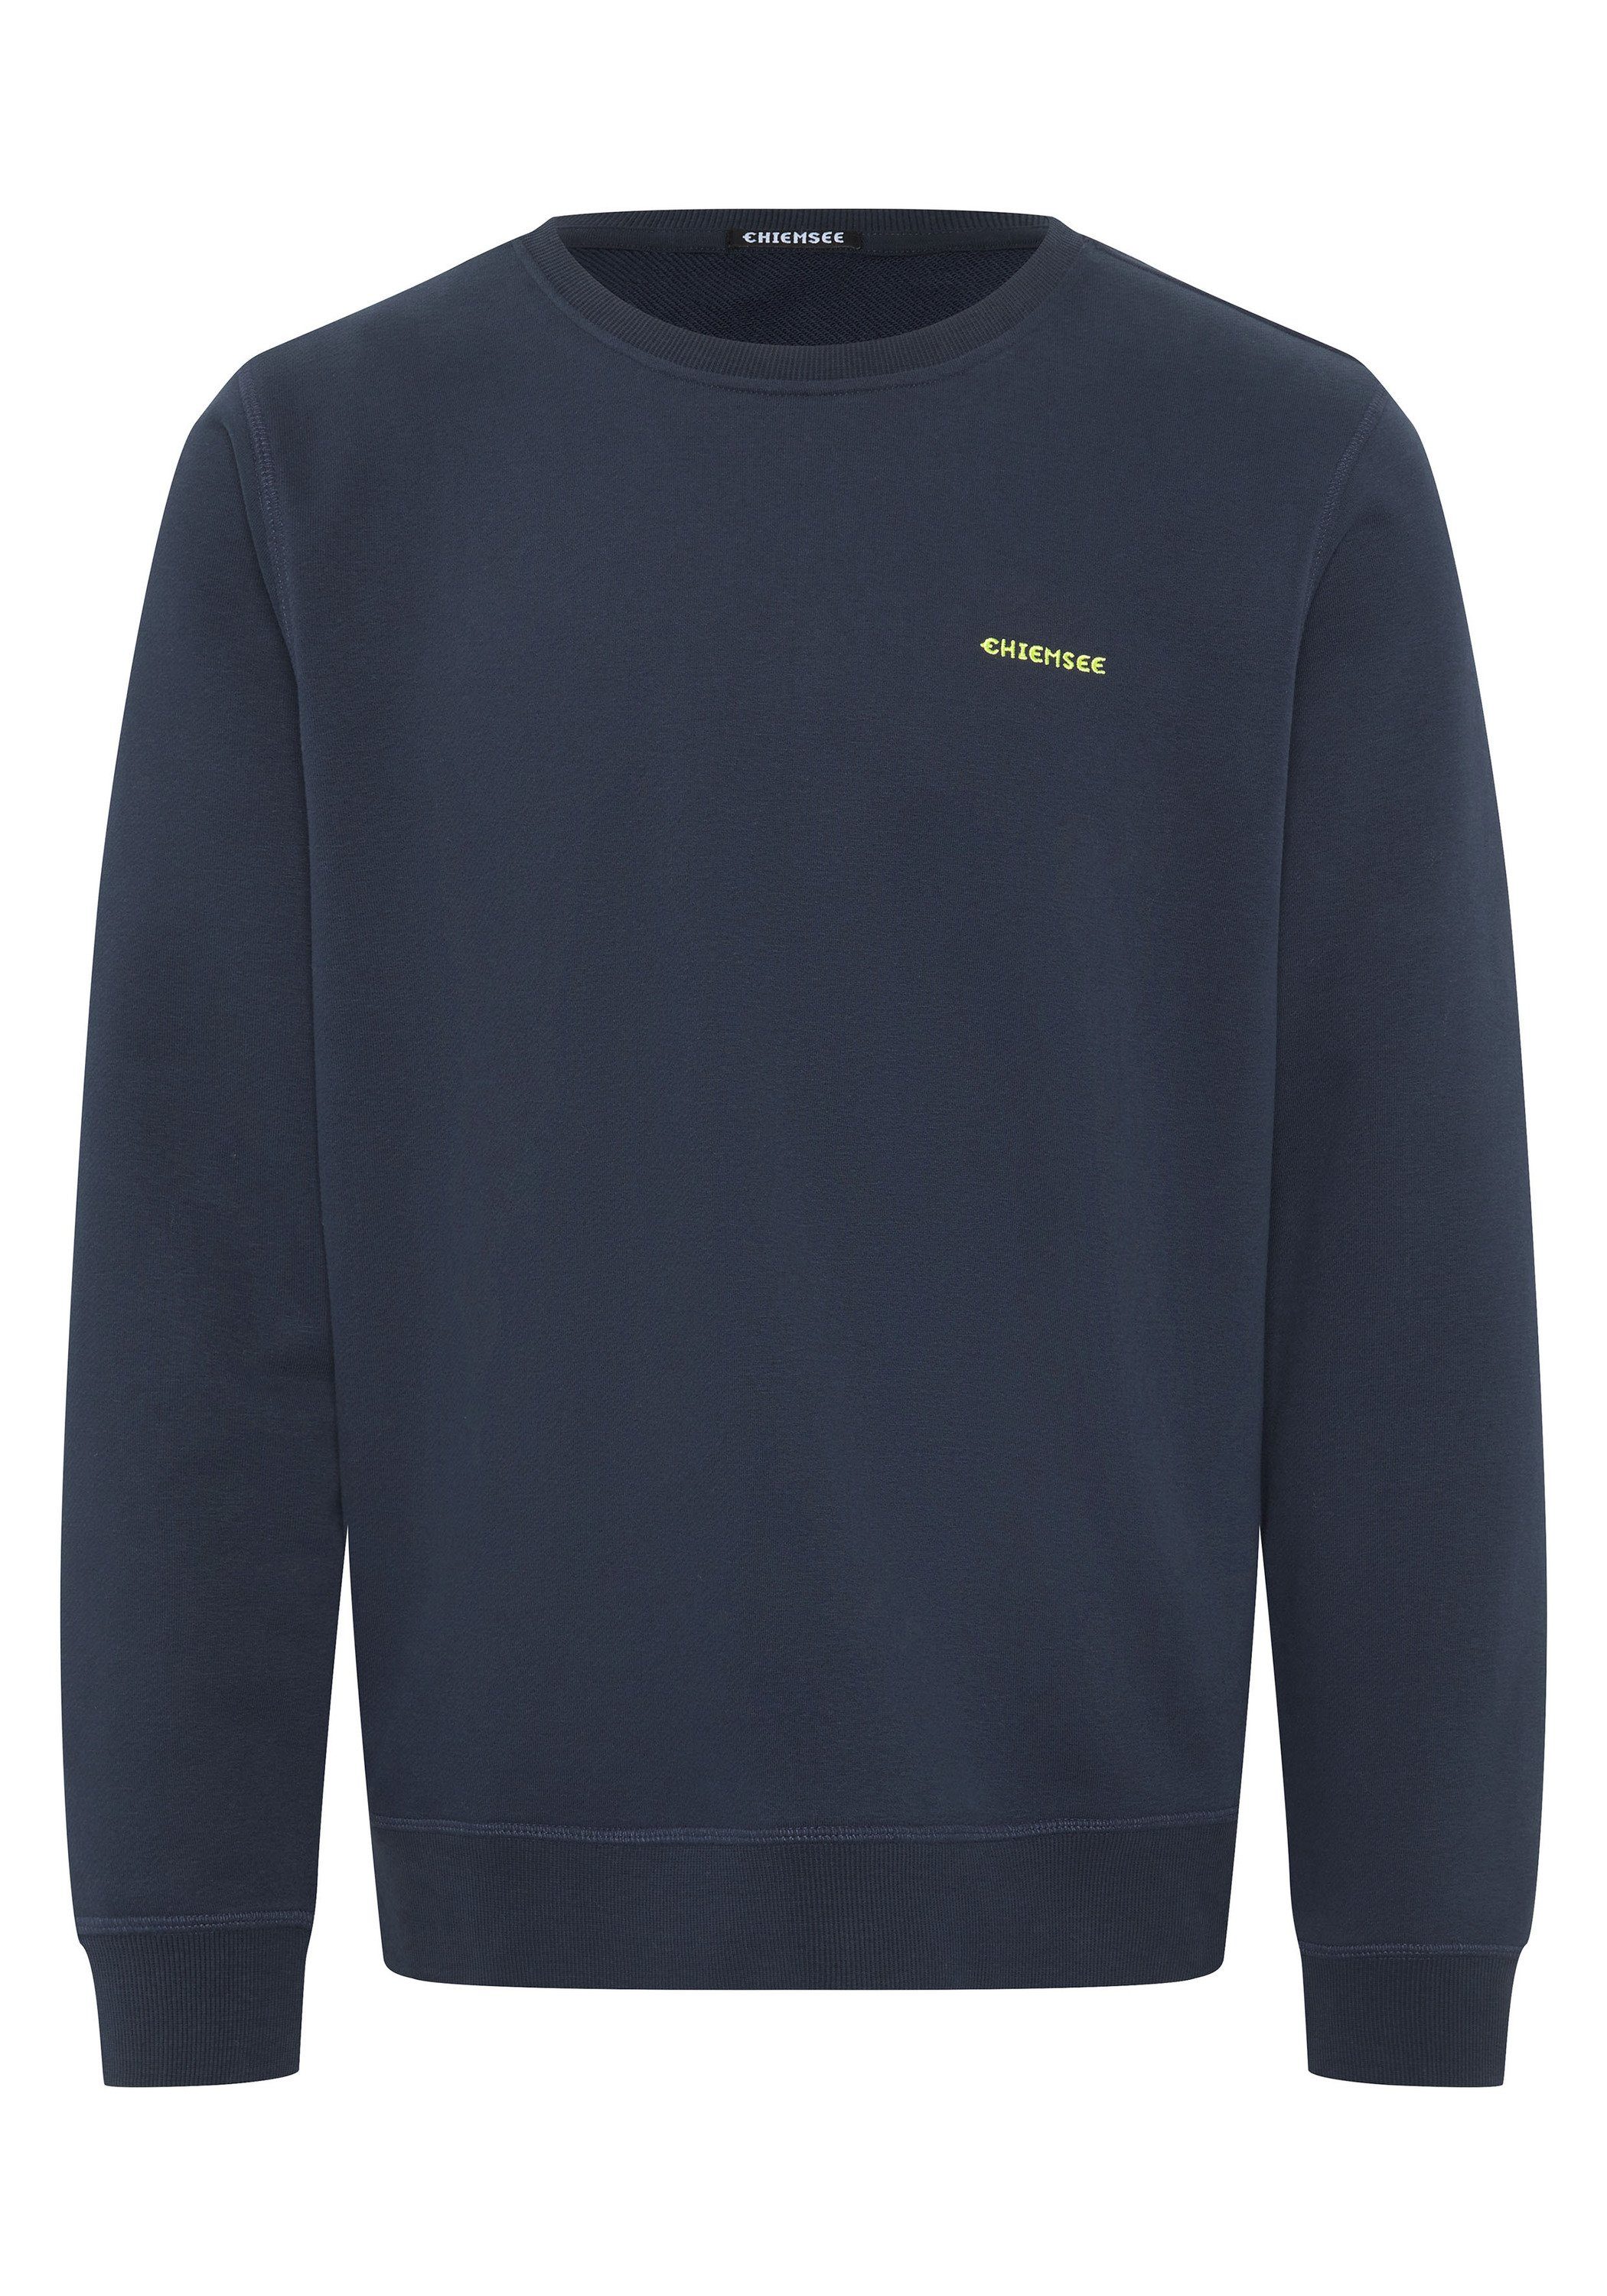 Chiemsee Sweatshirt Sweater mit Jumper-Motiv 1 19-3924 Night Sky